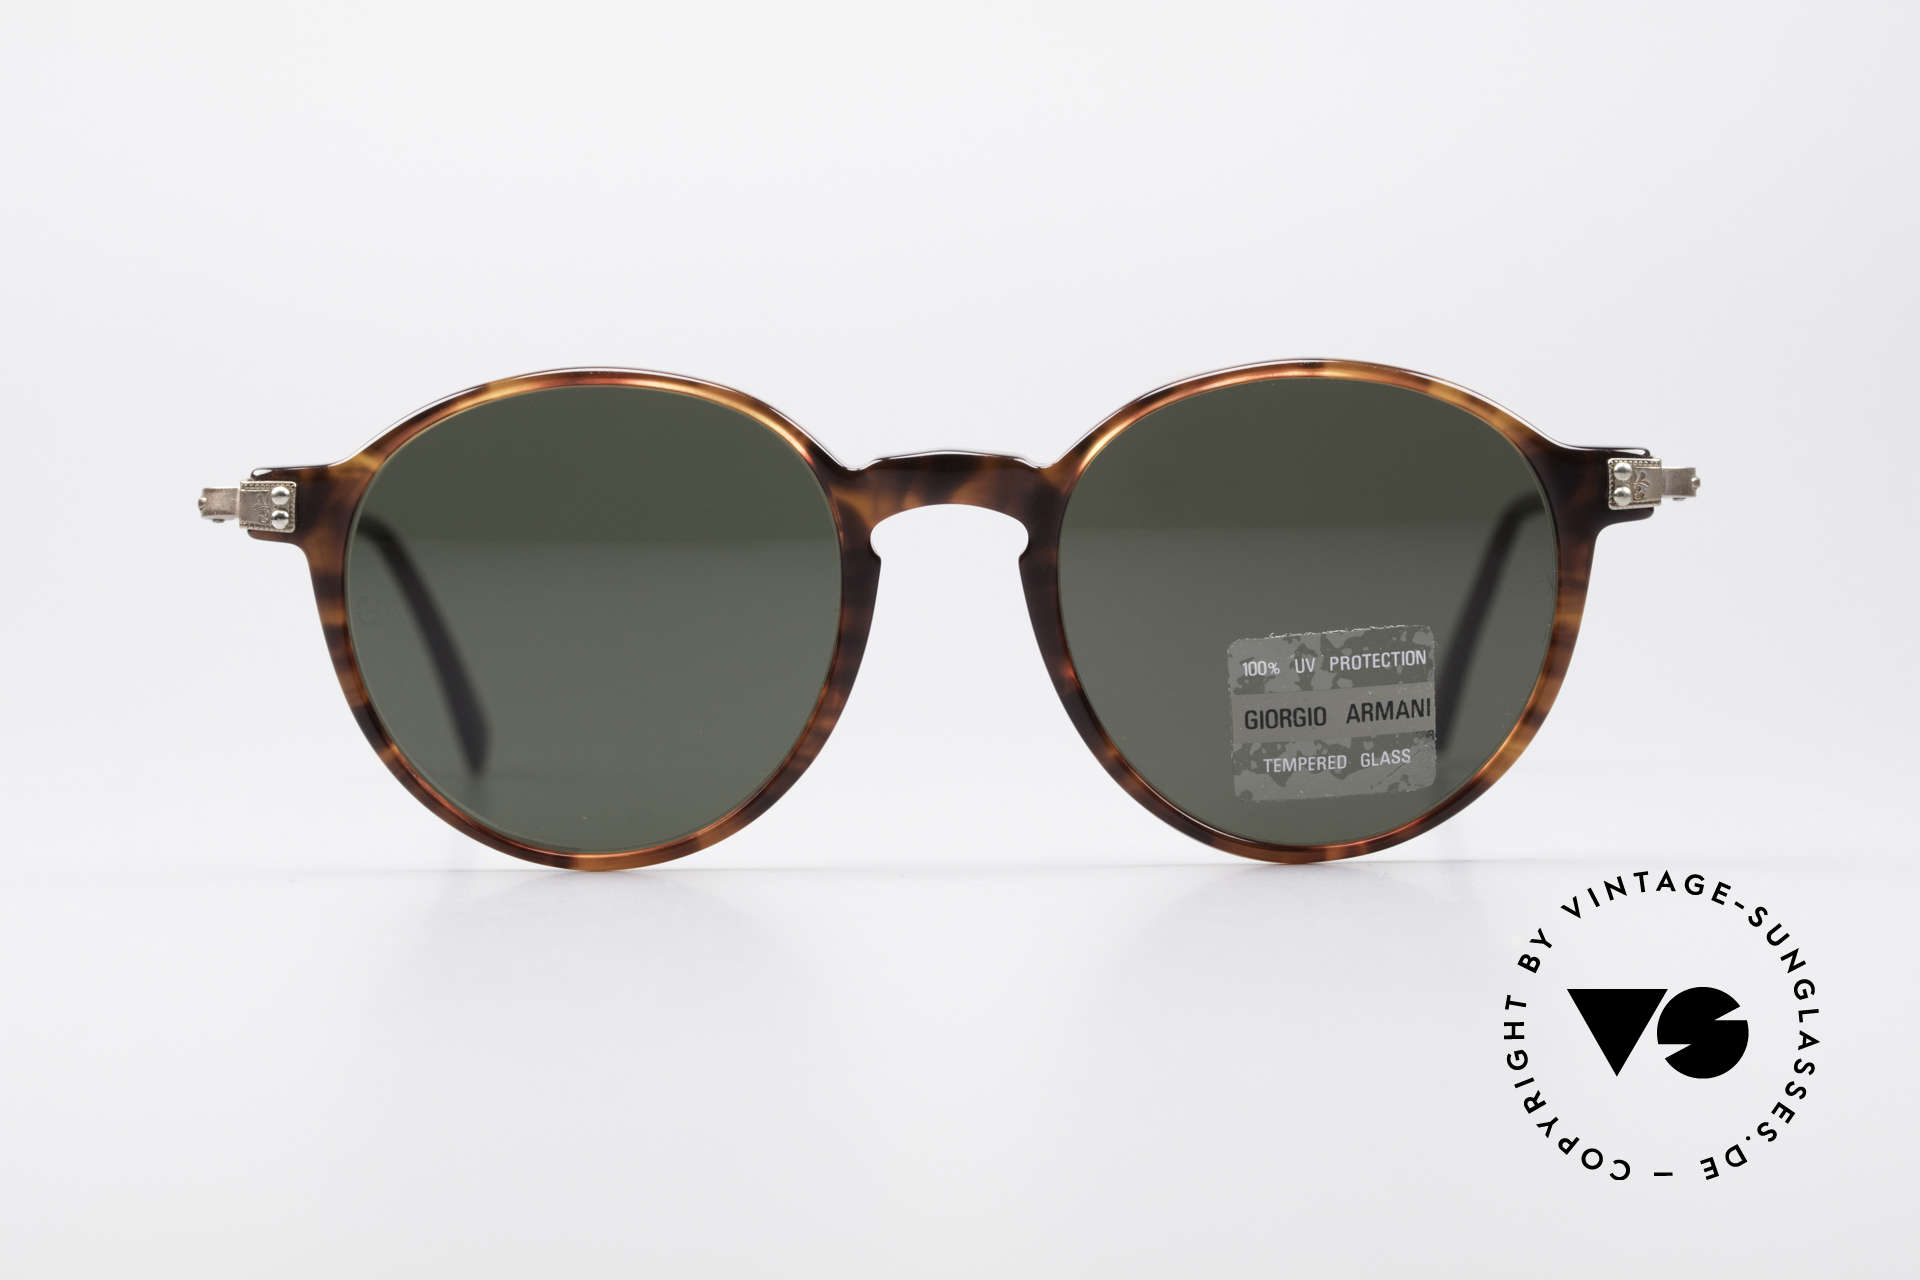 Sunglasses Giorgio Armani 358 Vintage Panto Sunglasses